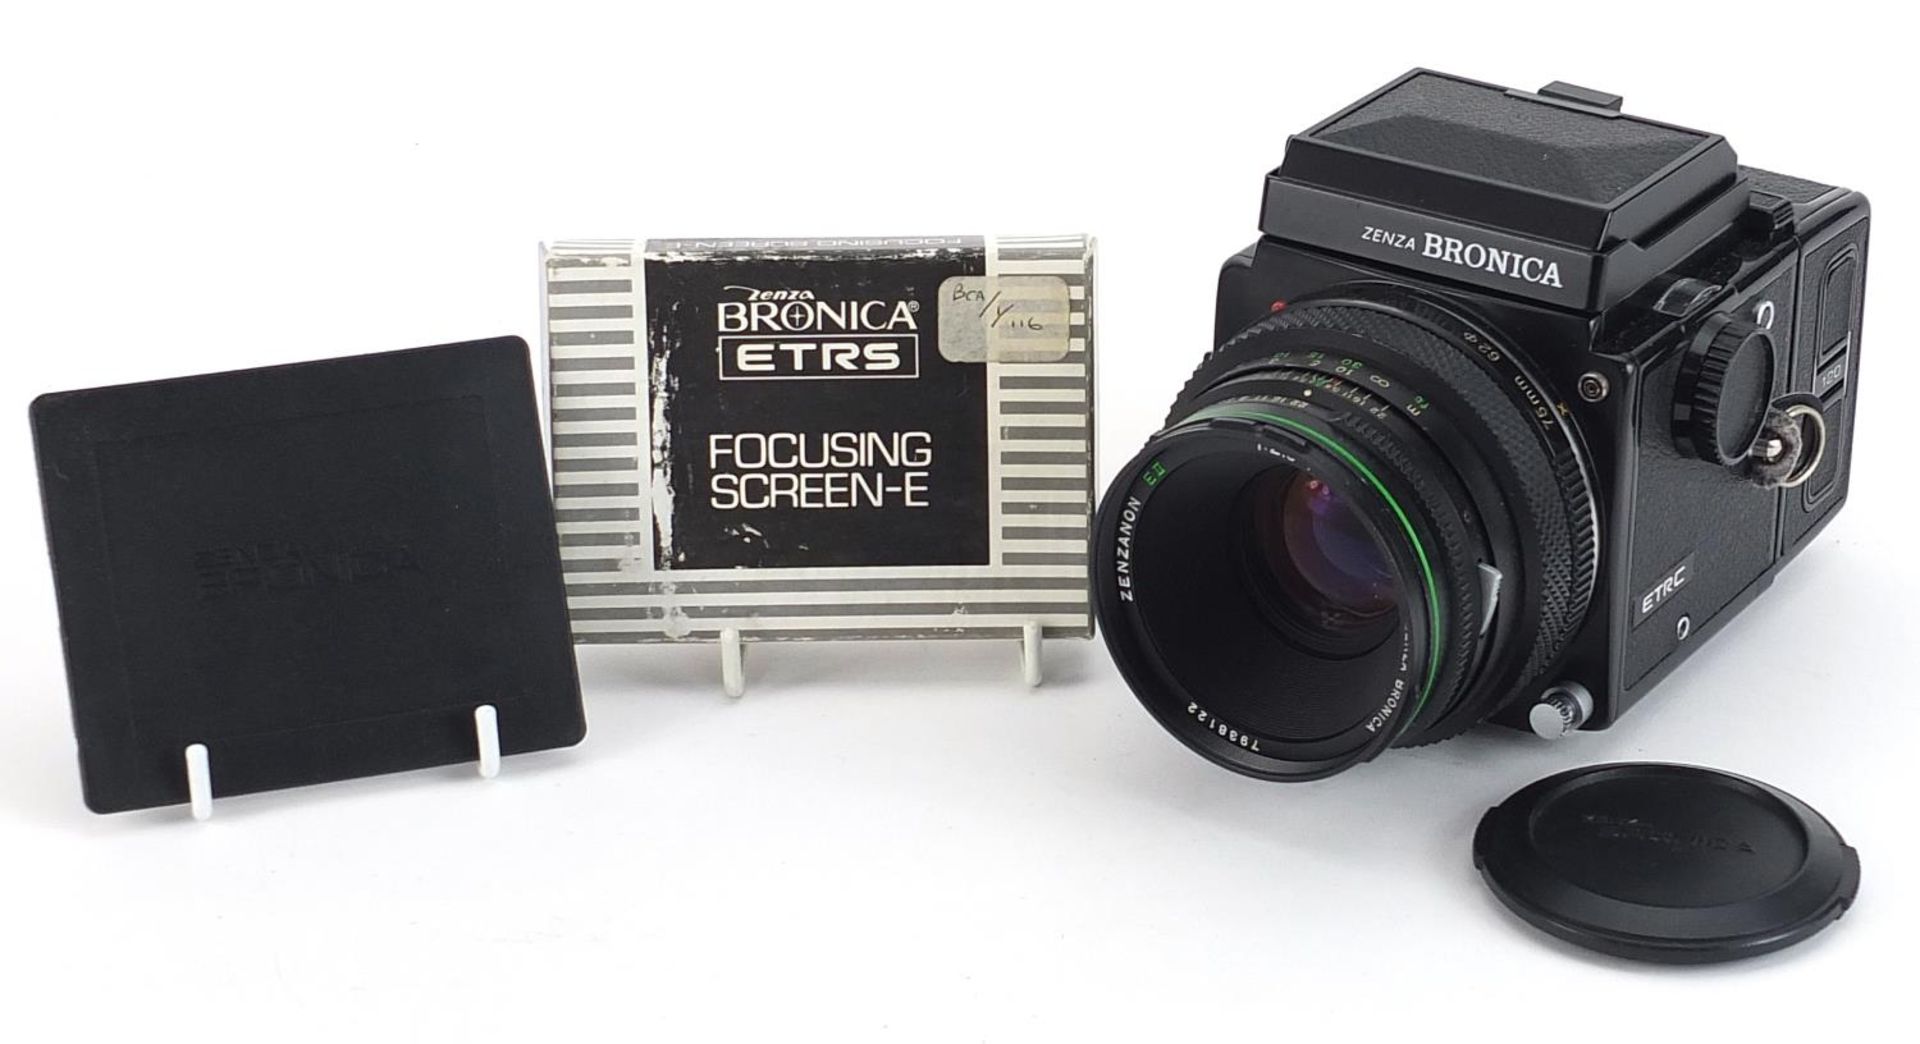 Zenza Bronica ETRC film camera with 75mm lens